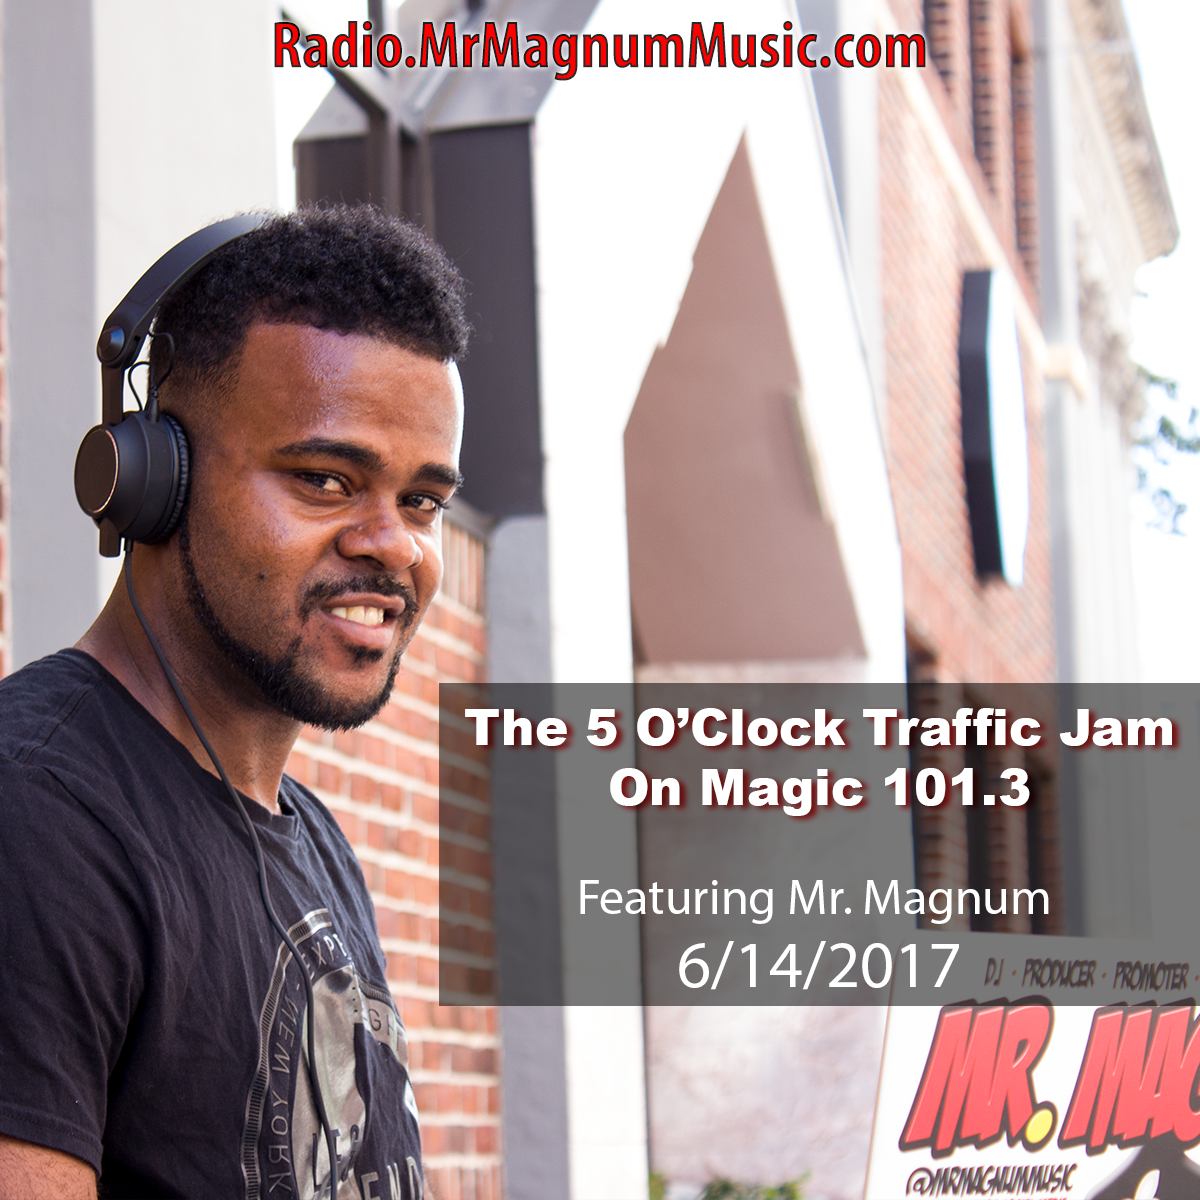 The 5 O'Clock Traffic Jam 20170614 featuring Gainesville's #1 DJ, Mr. Magnum on Magic 101.3